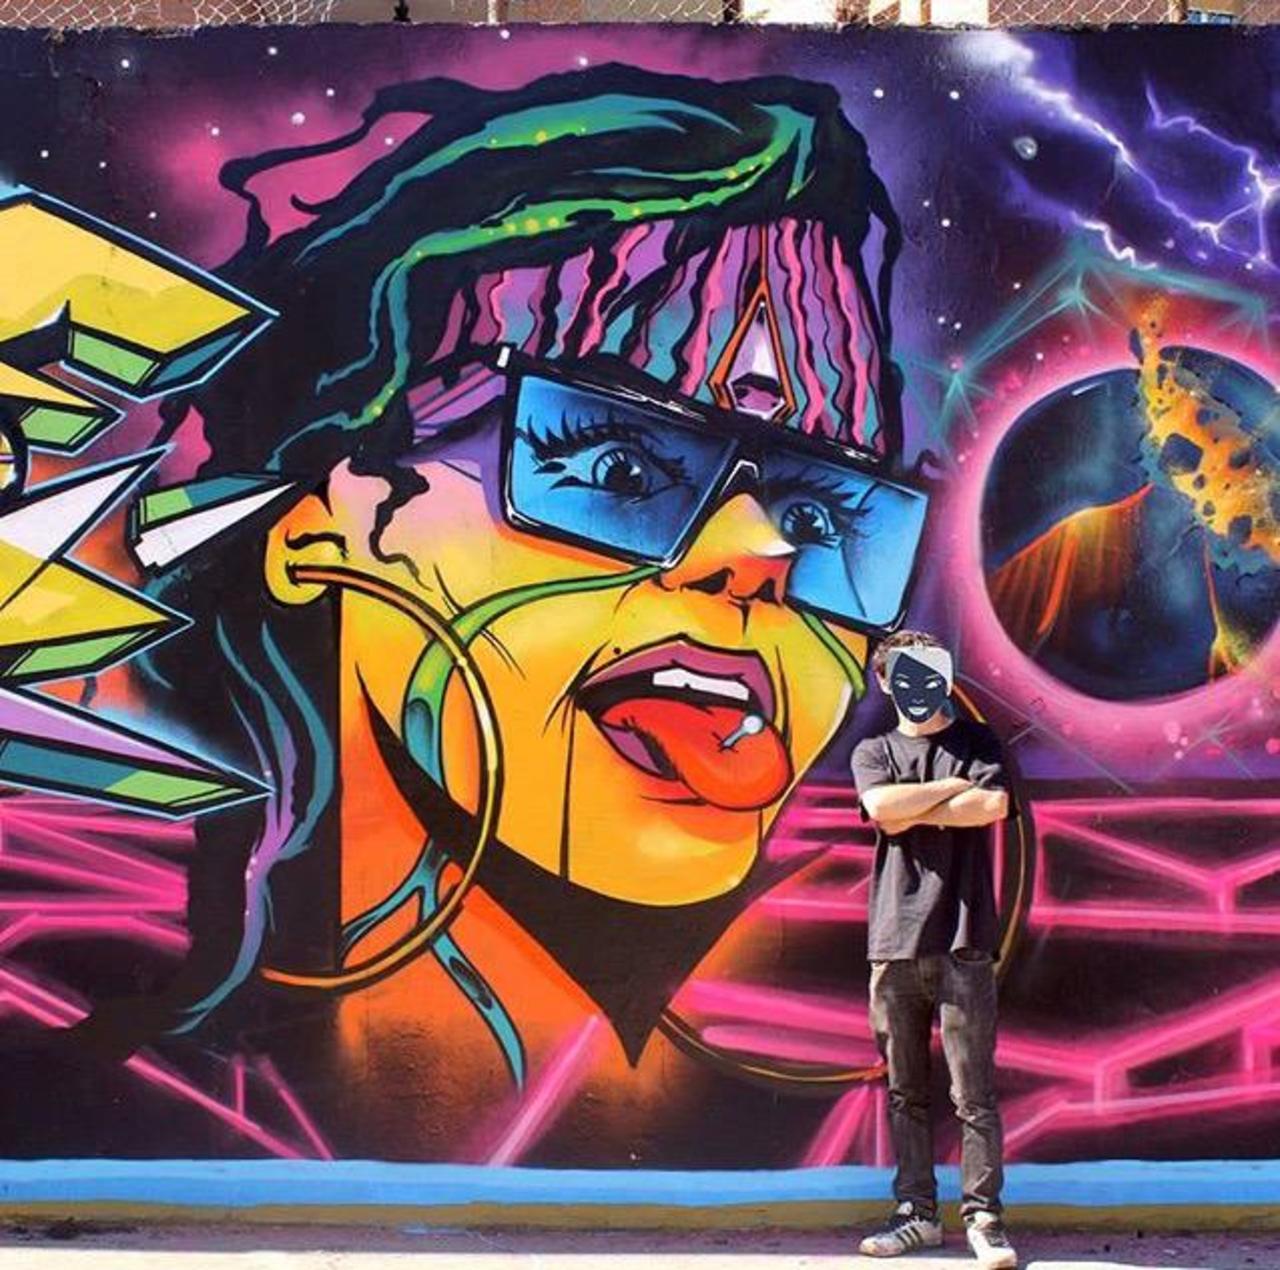 Brilliant new Street Art by the artist Jaycaes

#art #graffiti #mural #streetart http://t.co/uOCHuFw2Iq